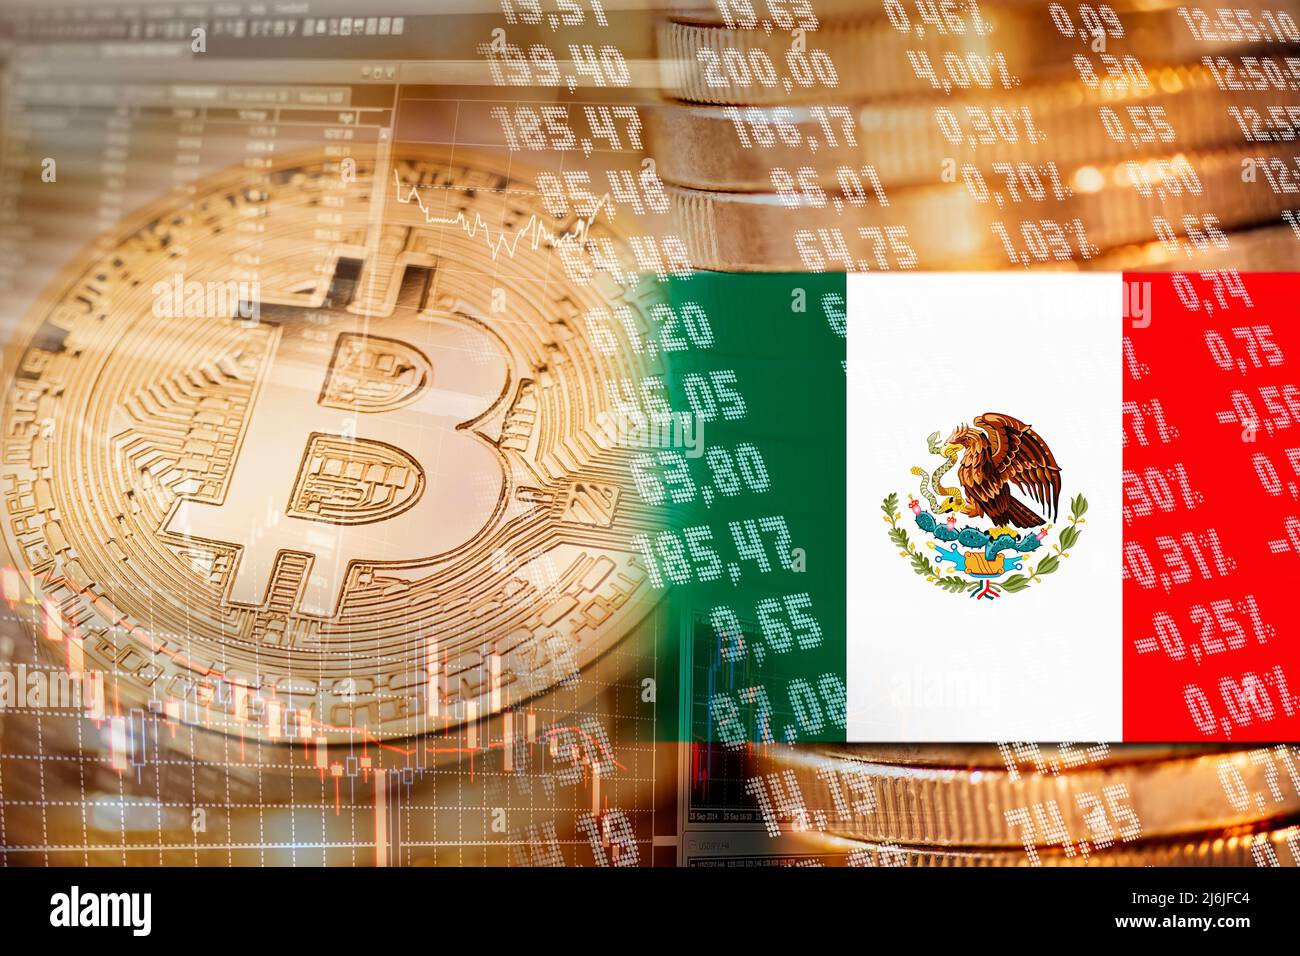 Bitcoin with financial market symbols and flag of Mexico Stock Photo